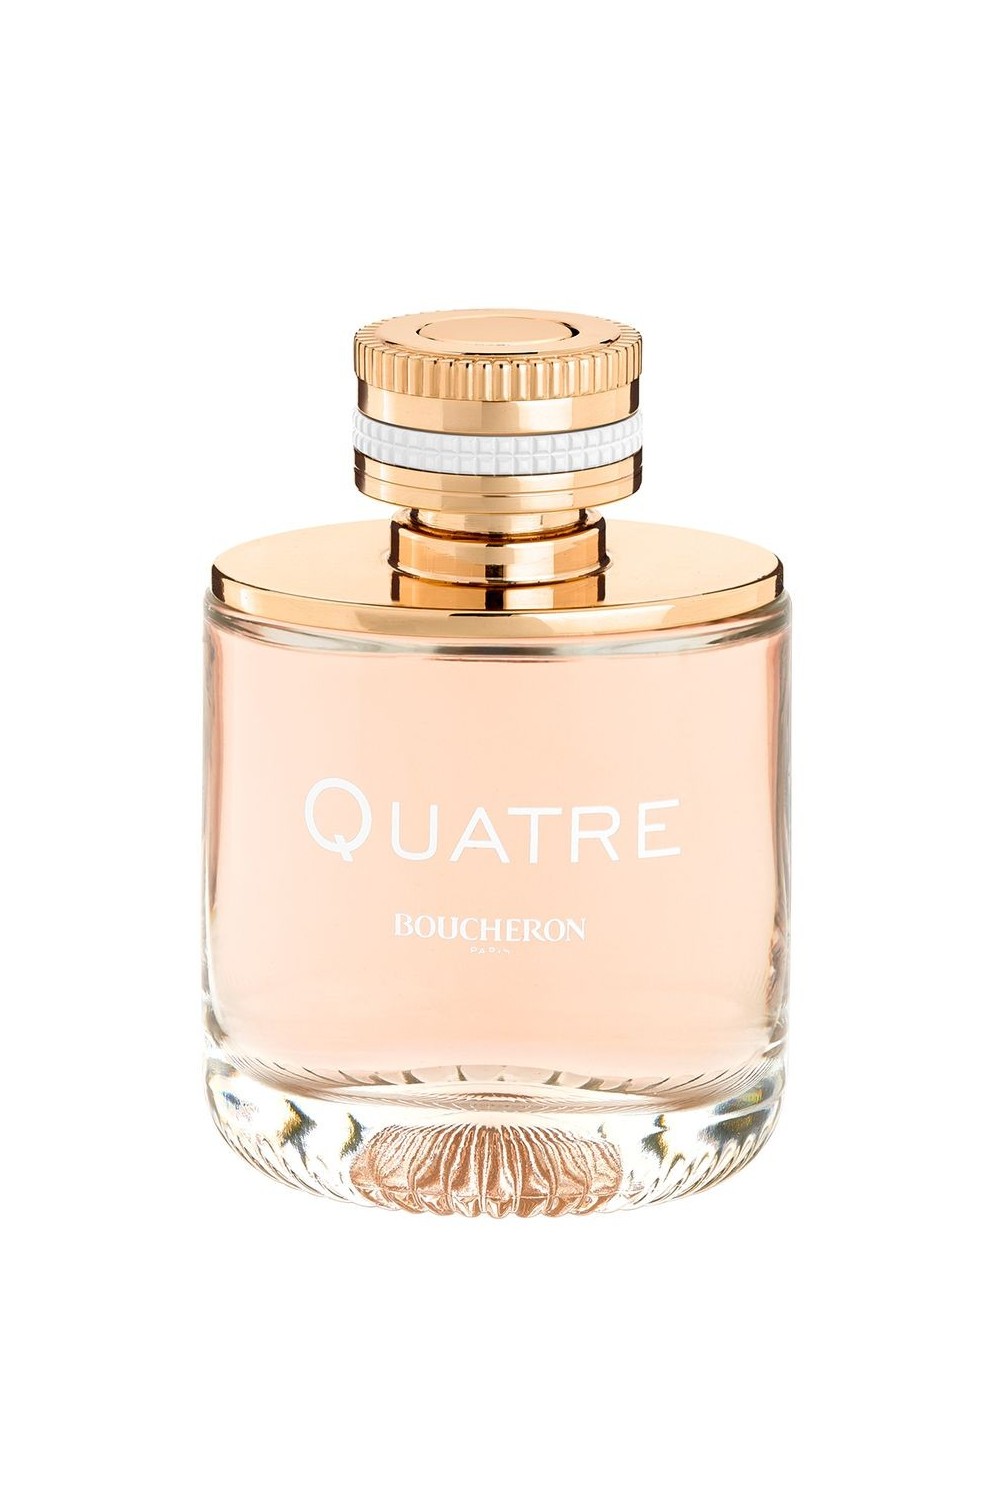 Boucheron Quatre Eau De Perfume Spray 50ml